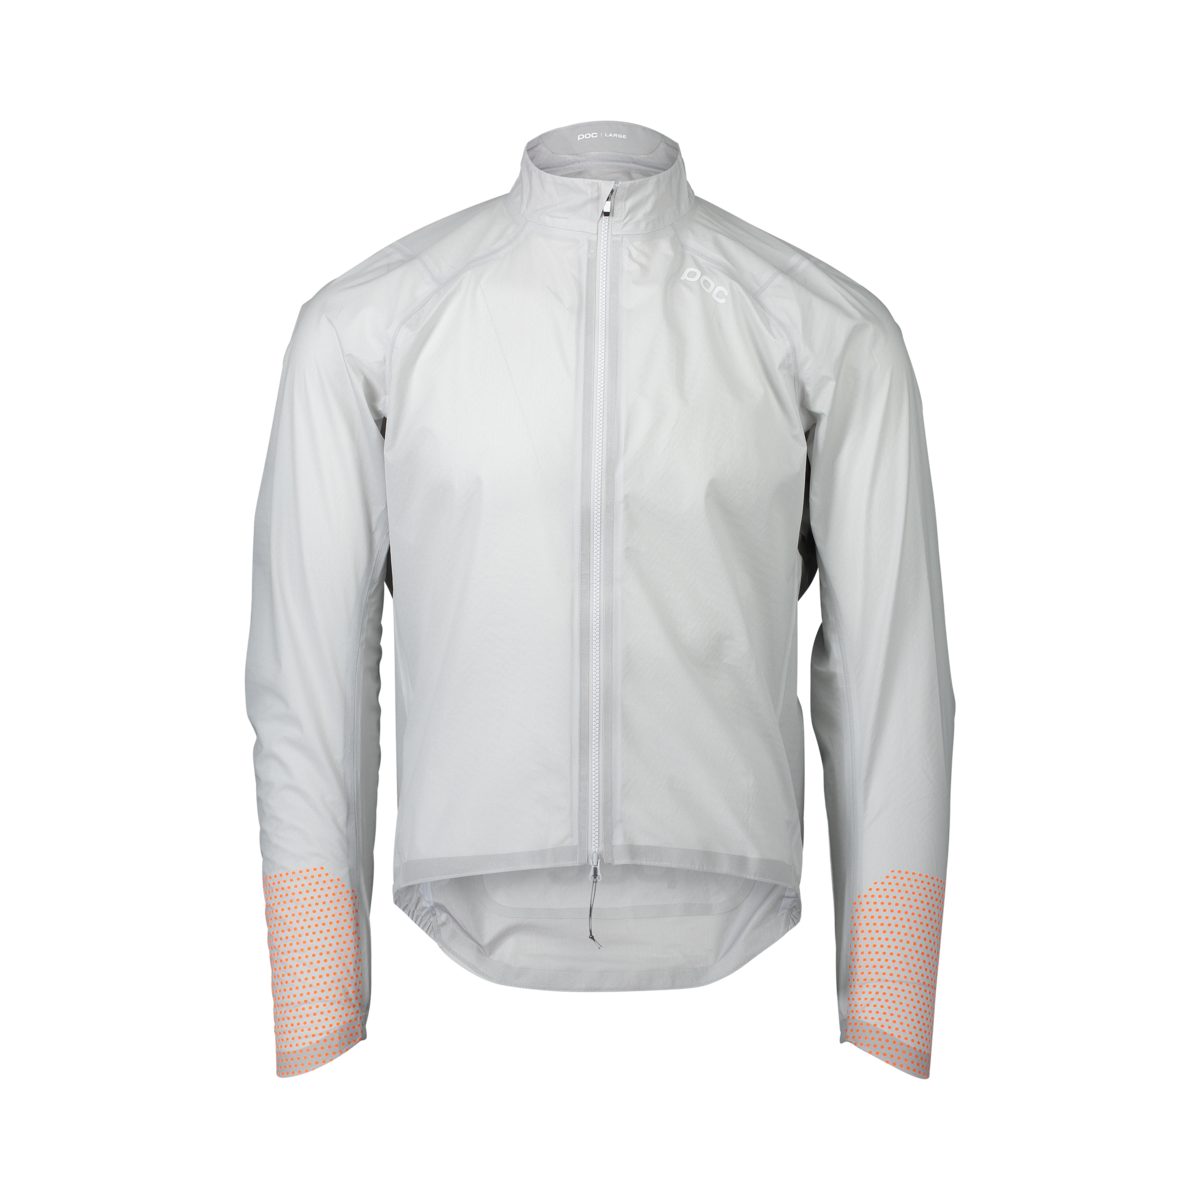 Poc Haven rain jacket - Veste imperméable | Hardloop